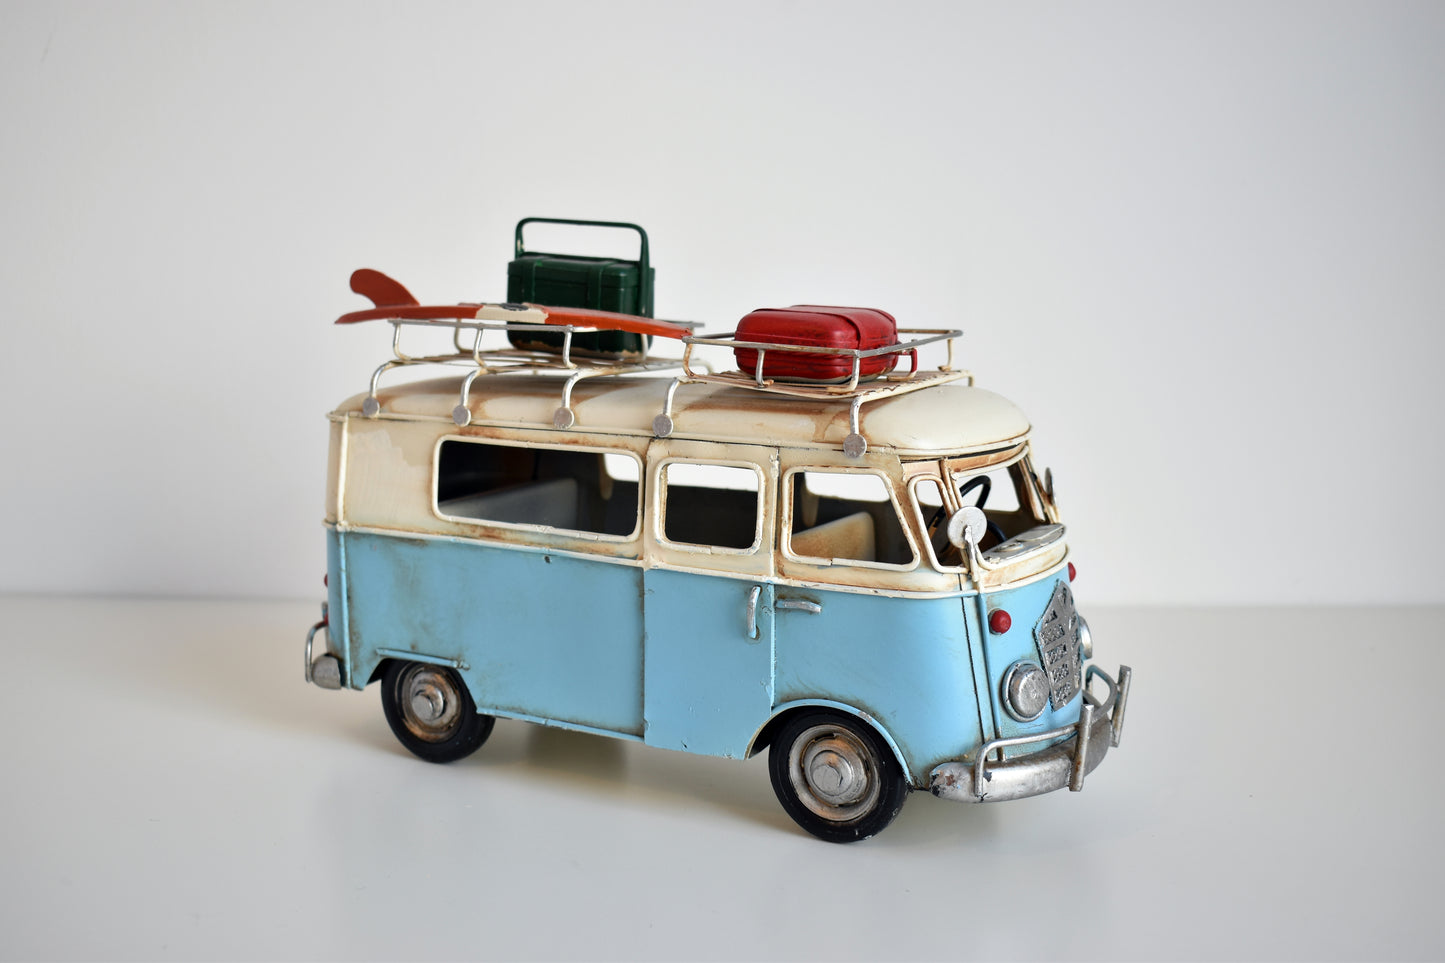 Split Screen Metal Retro Camper Van like VW model with Surf Board